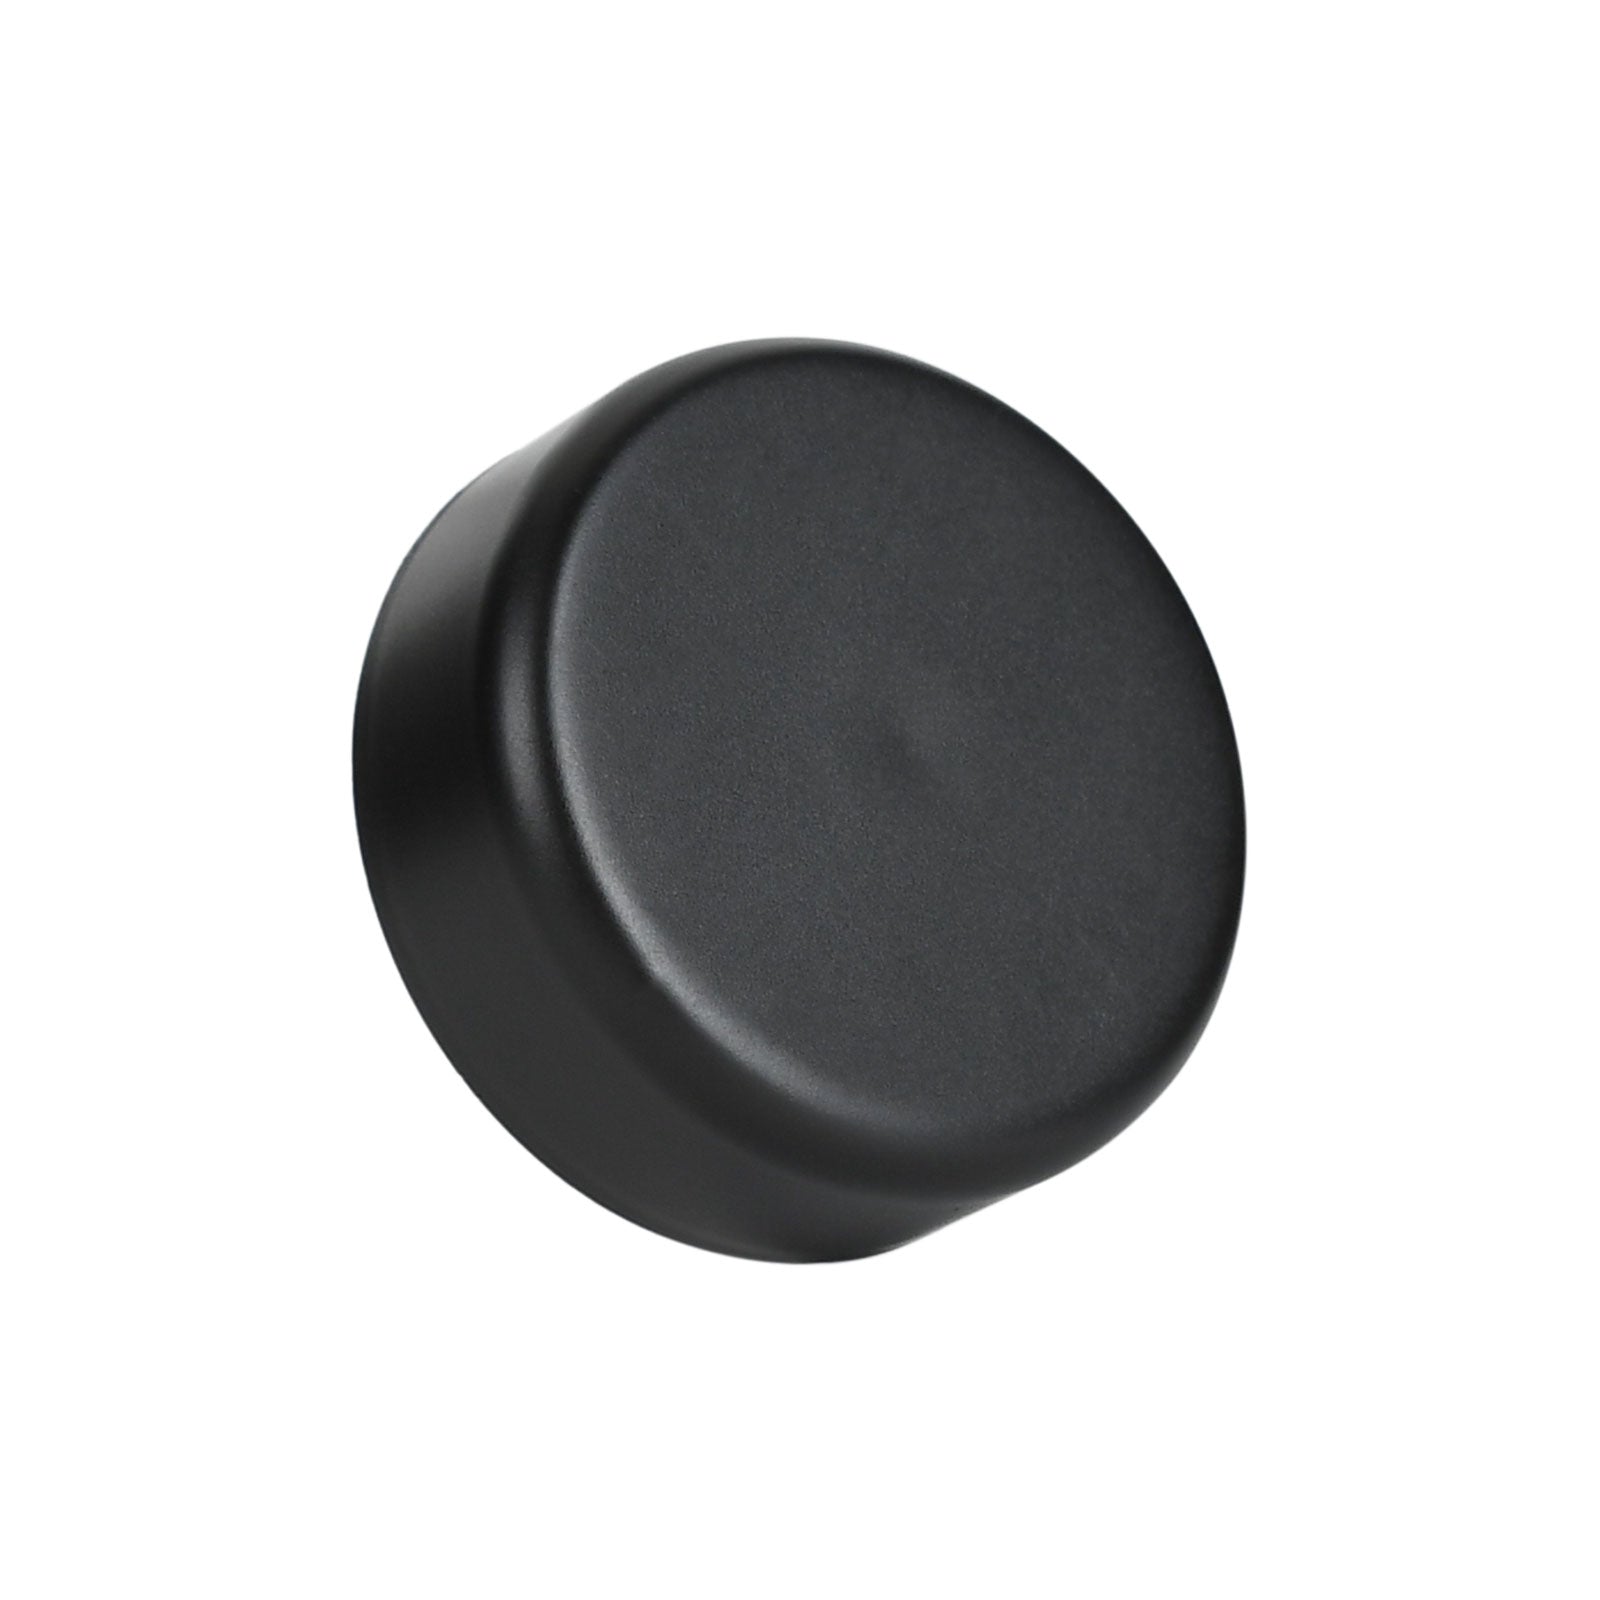 9ml Child Resistant Black Glass Jar With Black Cap - 2 Gram - 1 Count